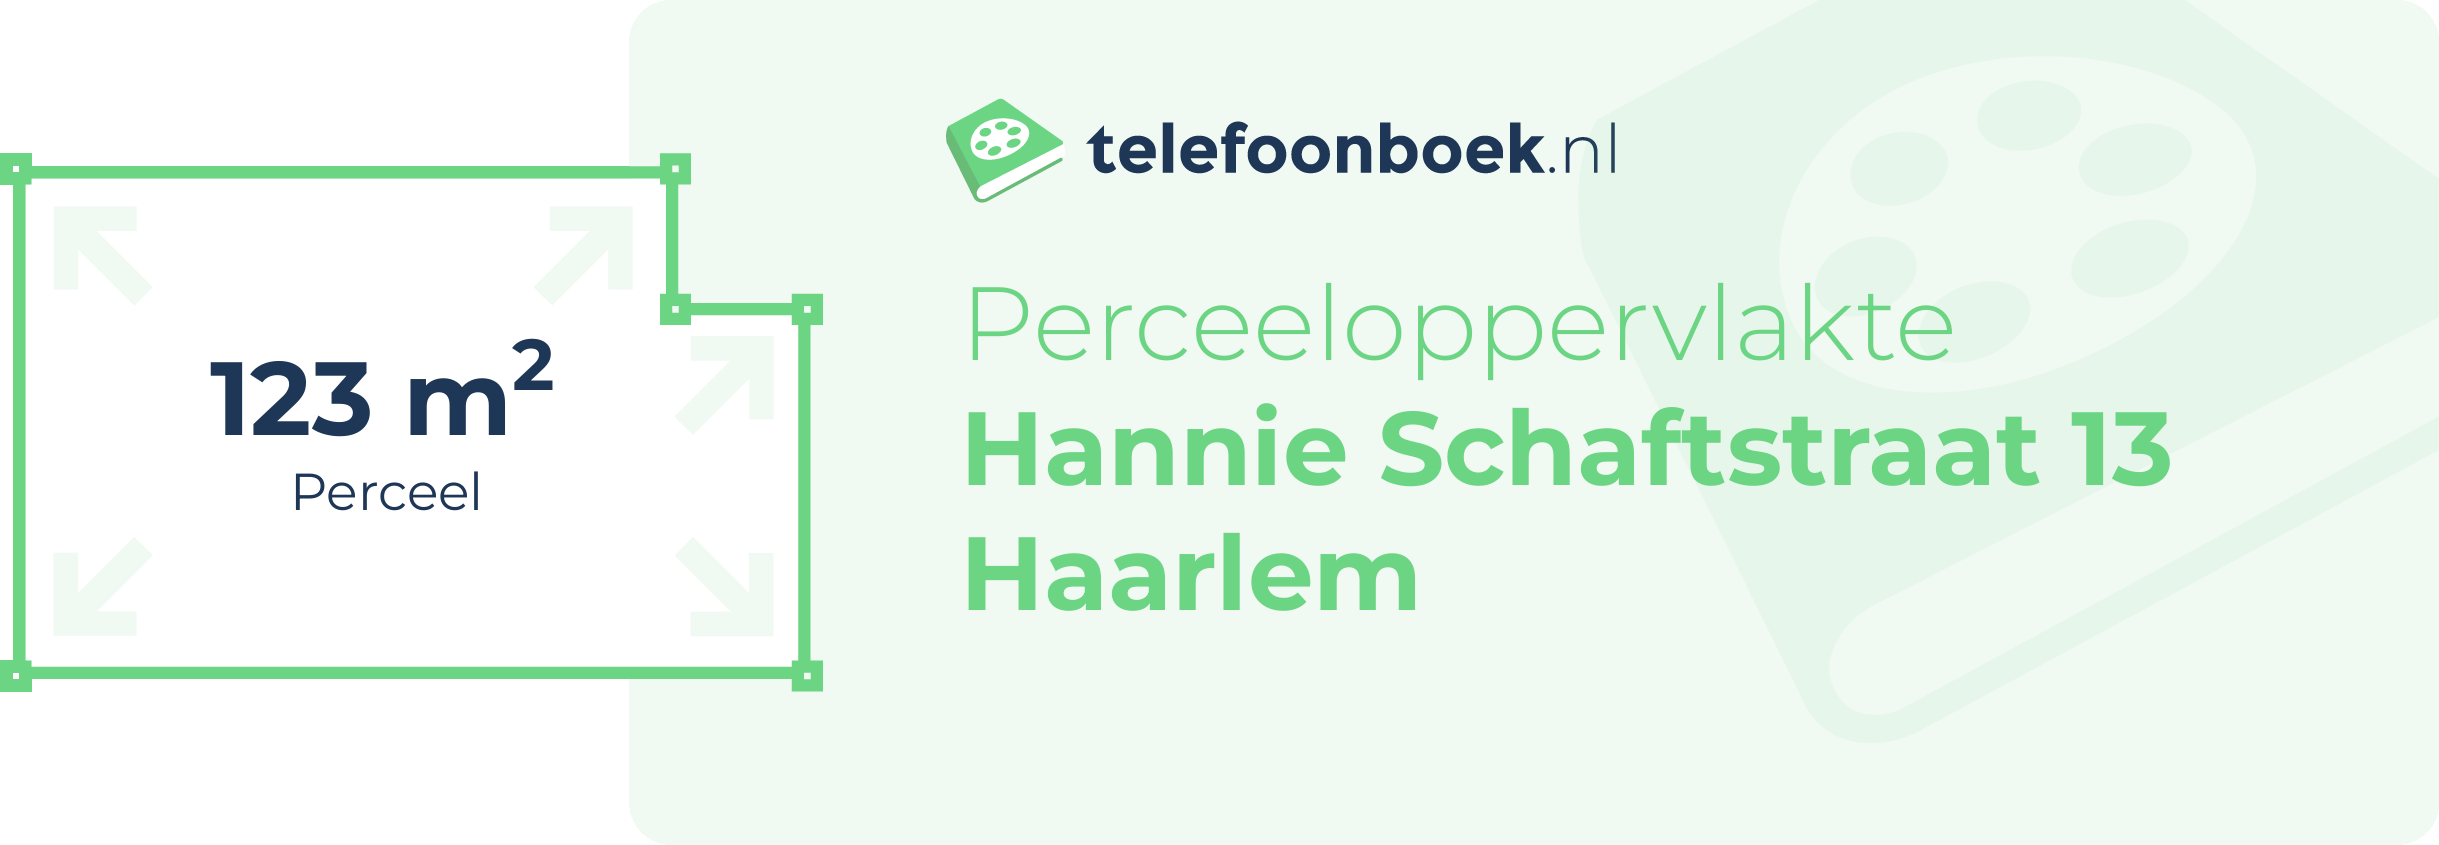 Perceeloppervlakte Hannie Schaftstraat 13 Haarlem